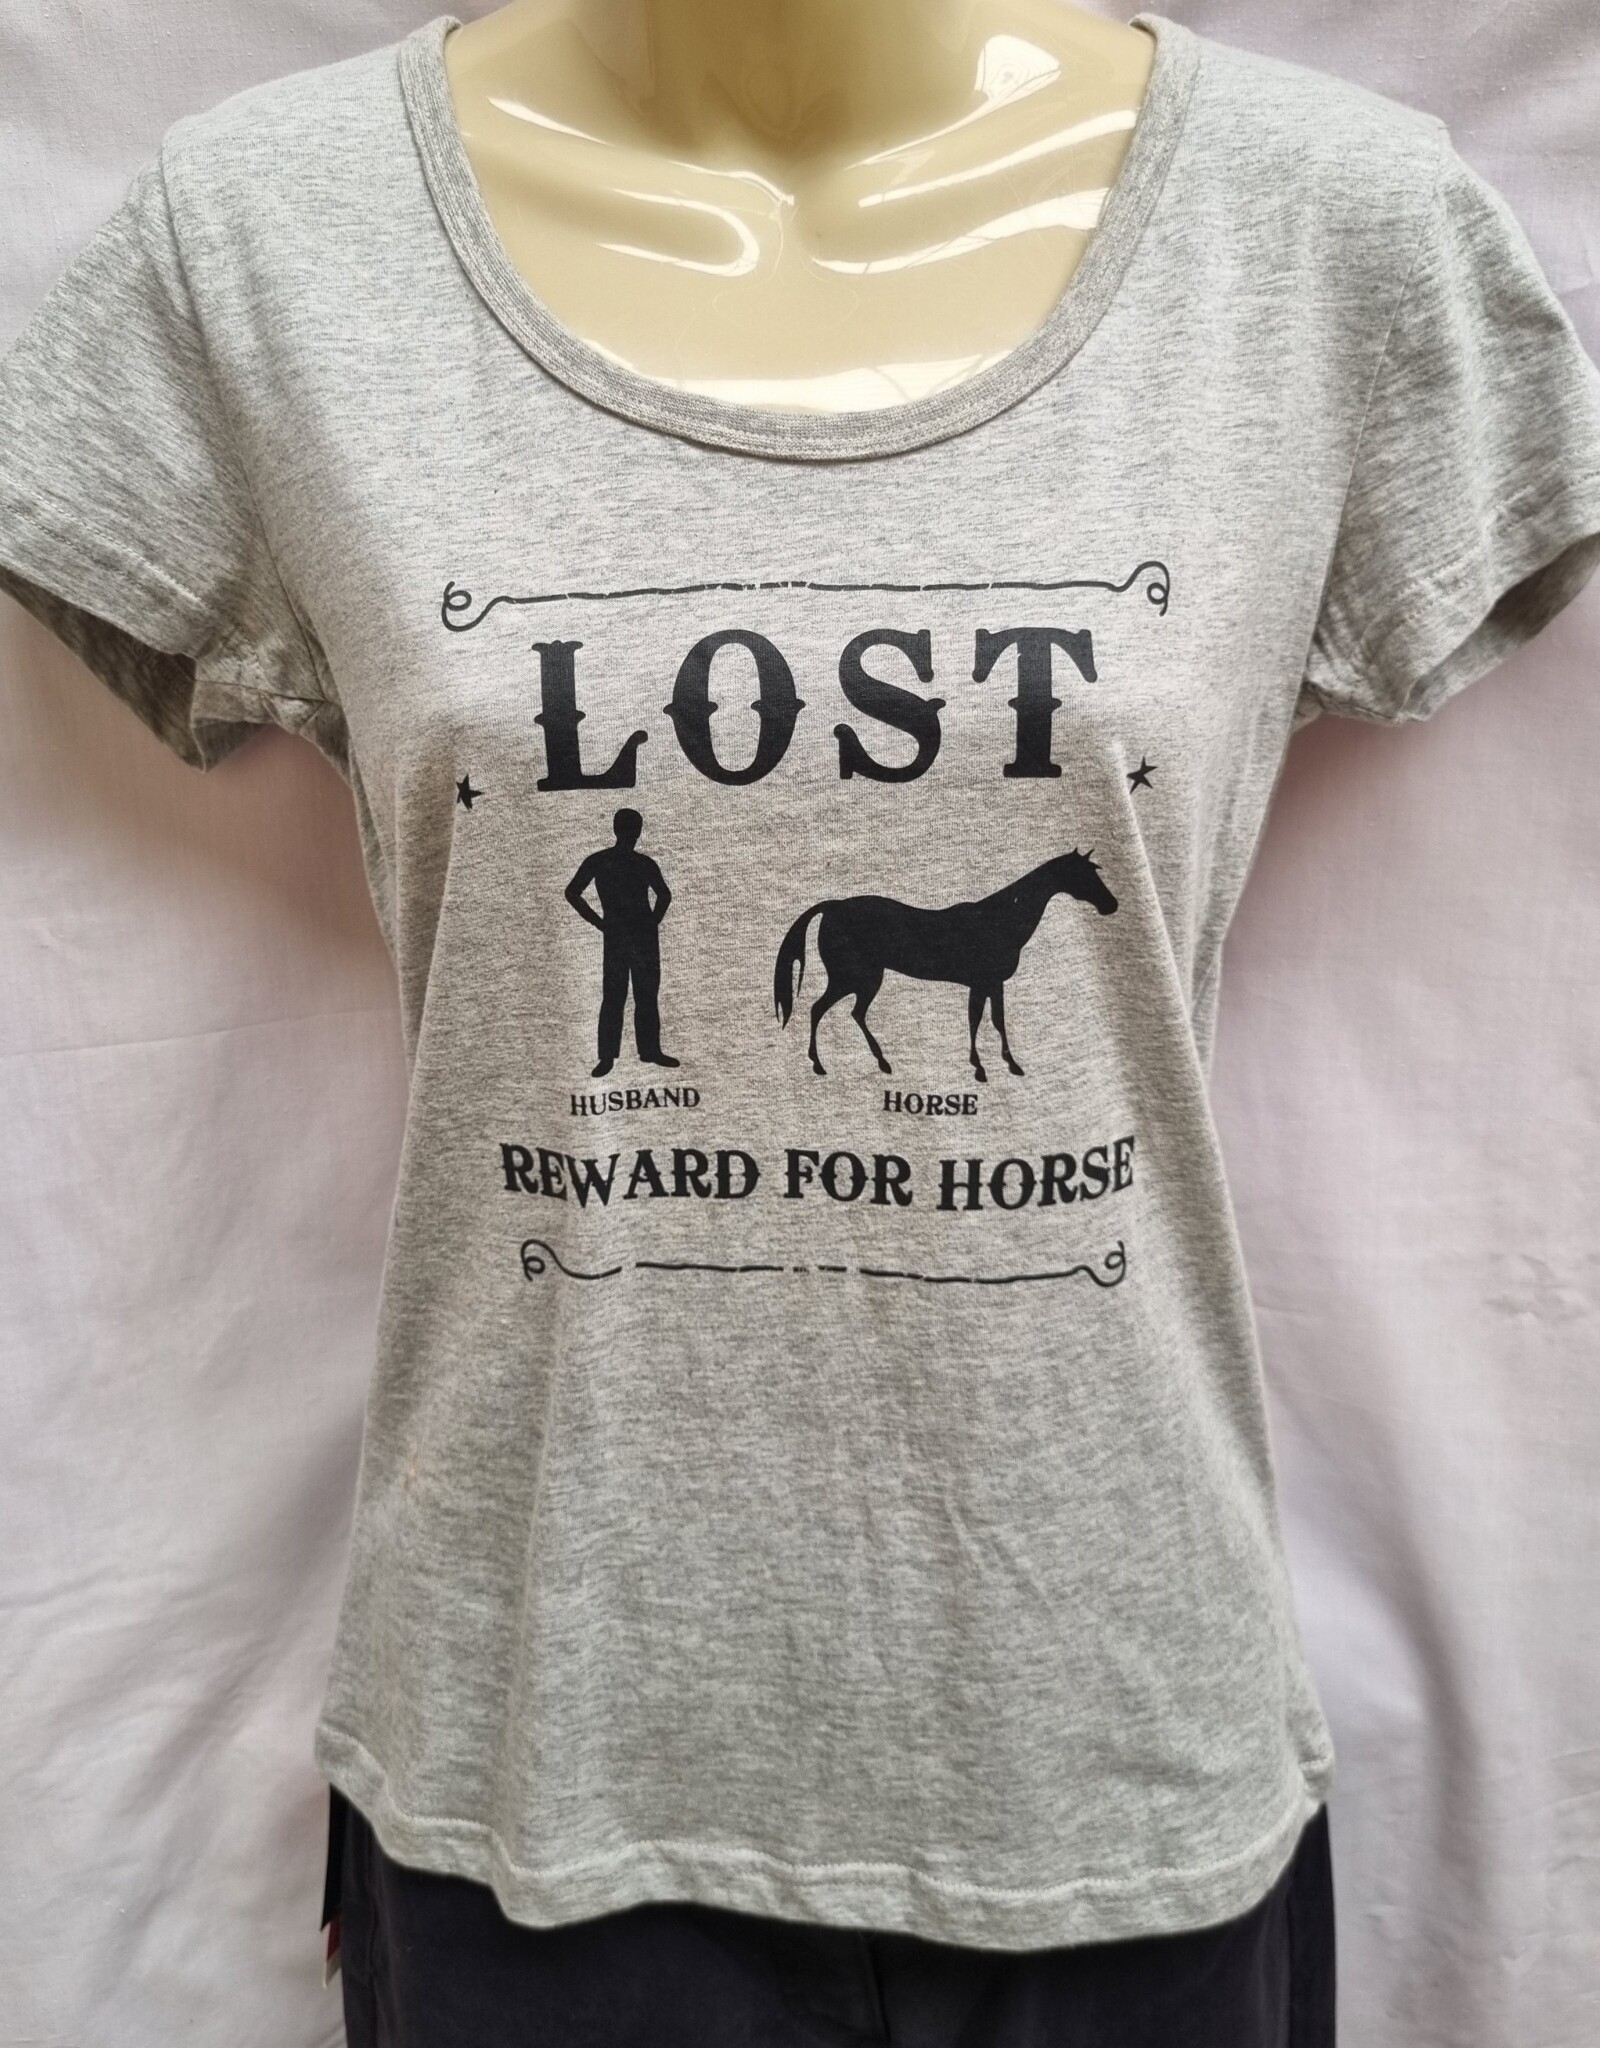 Giddy Up Girl T-Shirt Lost (Husband, Horse) Reward Size M